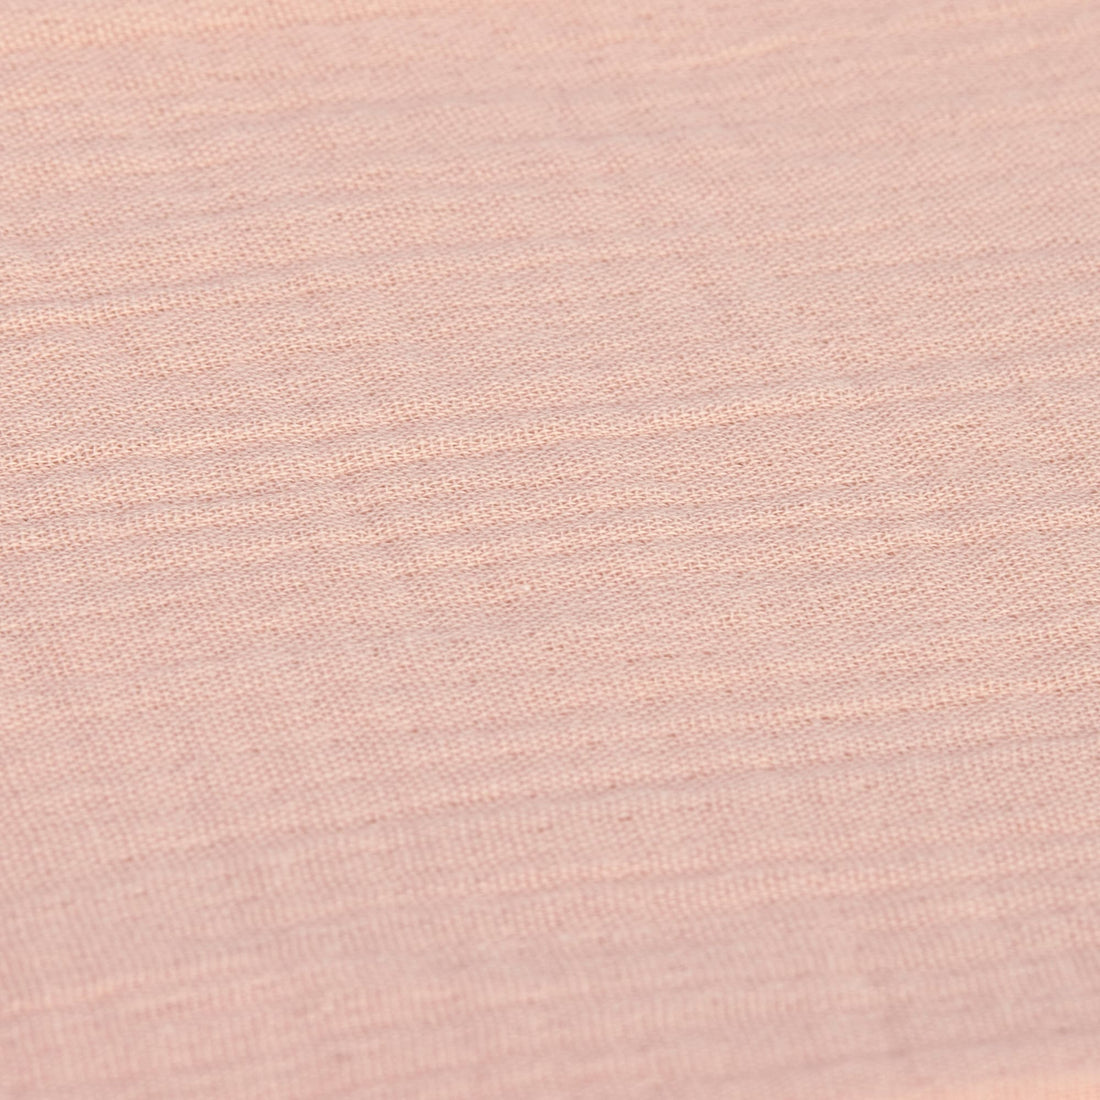 Lässig - Kinder baby- Kapuzenhandtuch Baumwollmuslin rosa